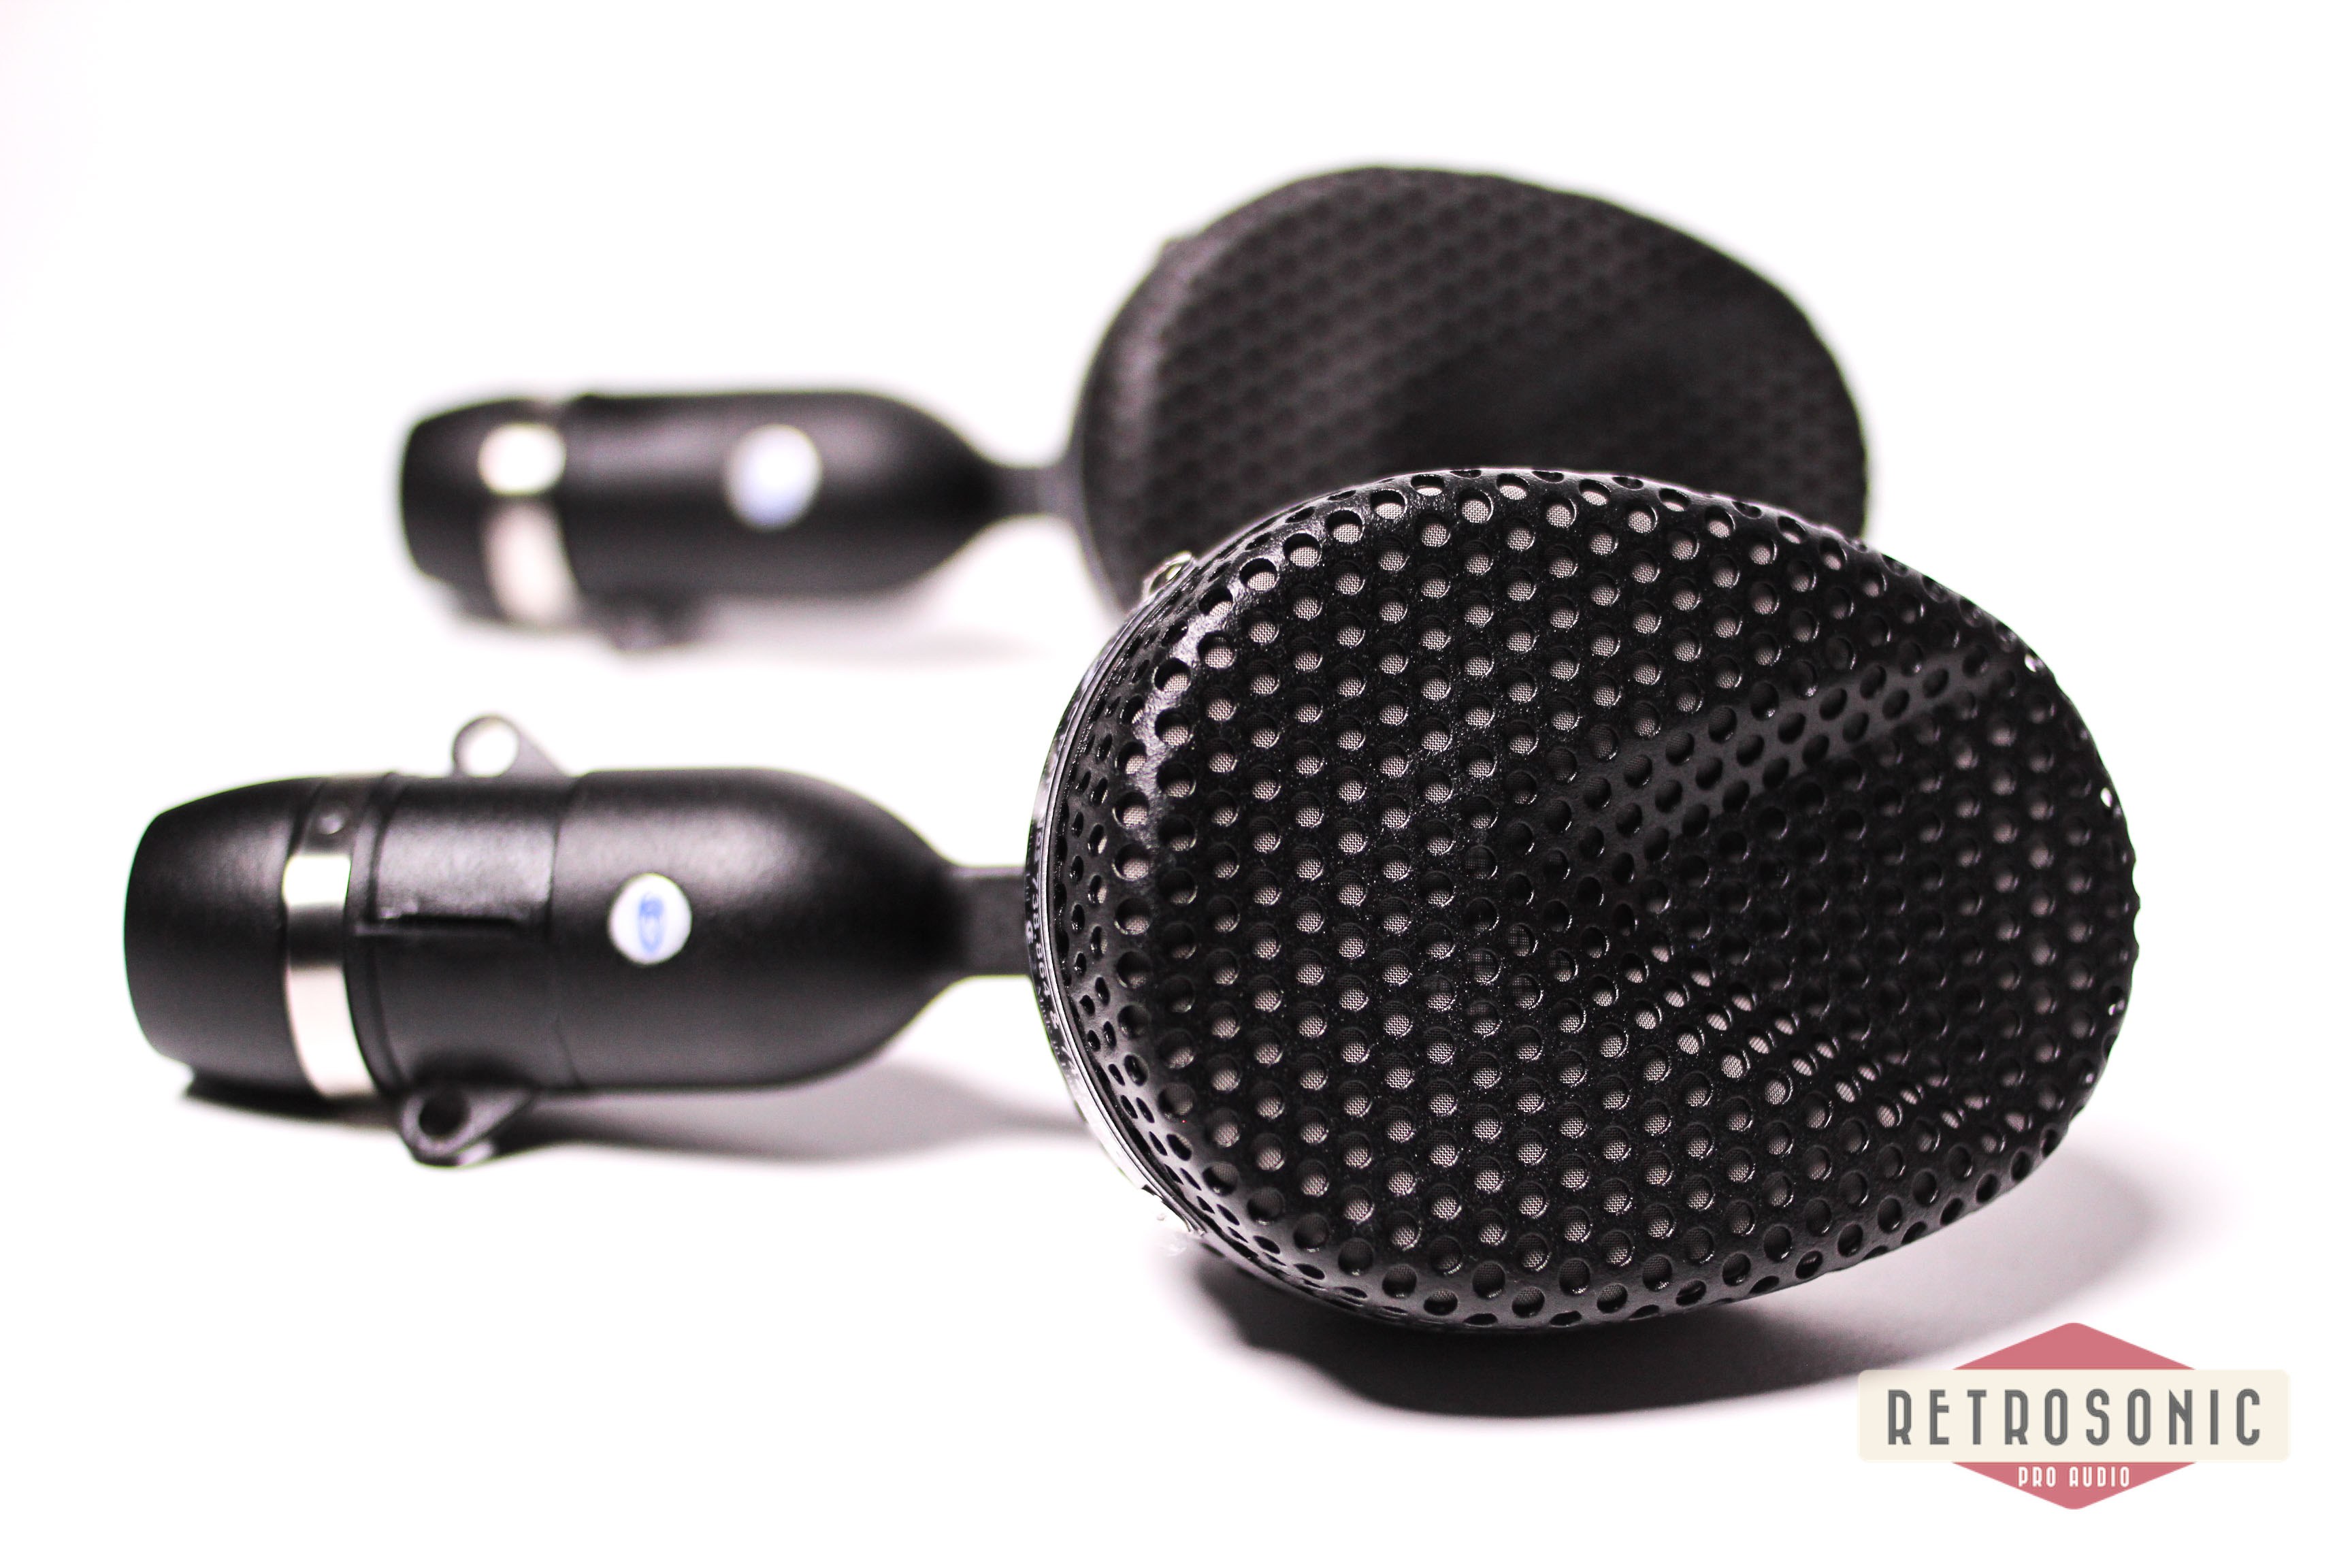 Coles 4038 Studio Ribbon Microphone Stereo Pair